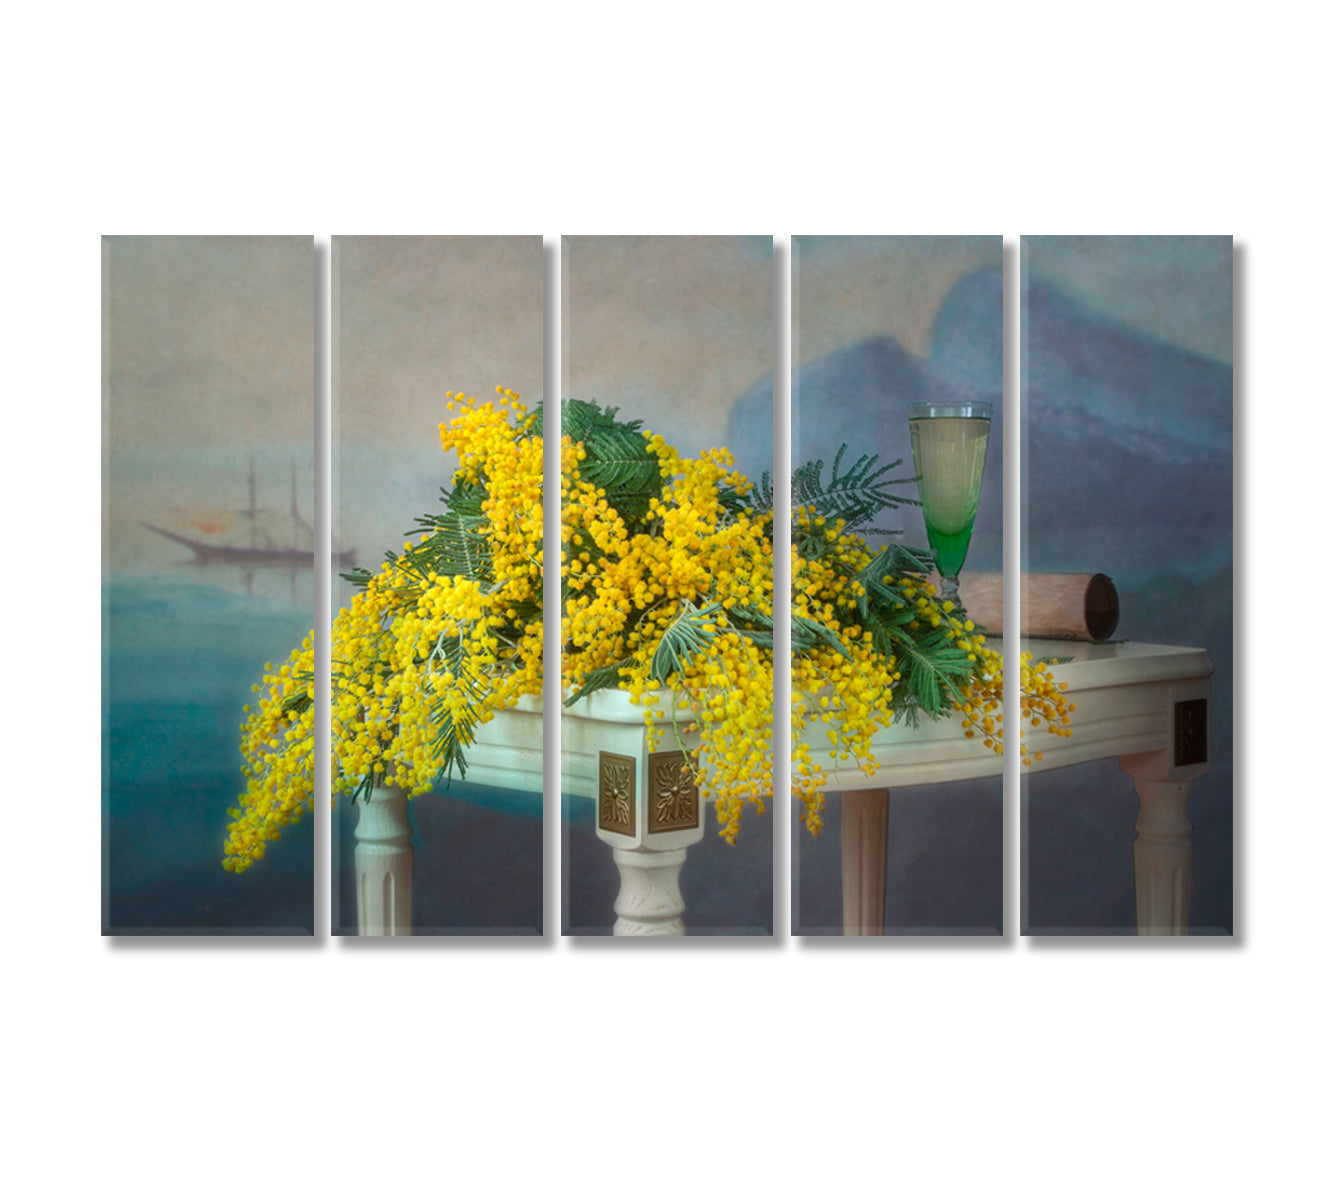 Mimosa Branches Still Life Wall Decor-Canvas Print-CetArt-5 Panels-36x24 inches-CetArt